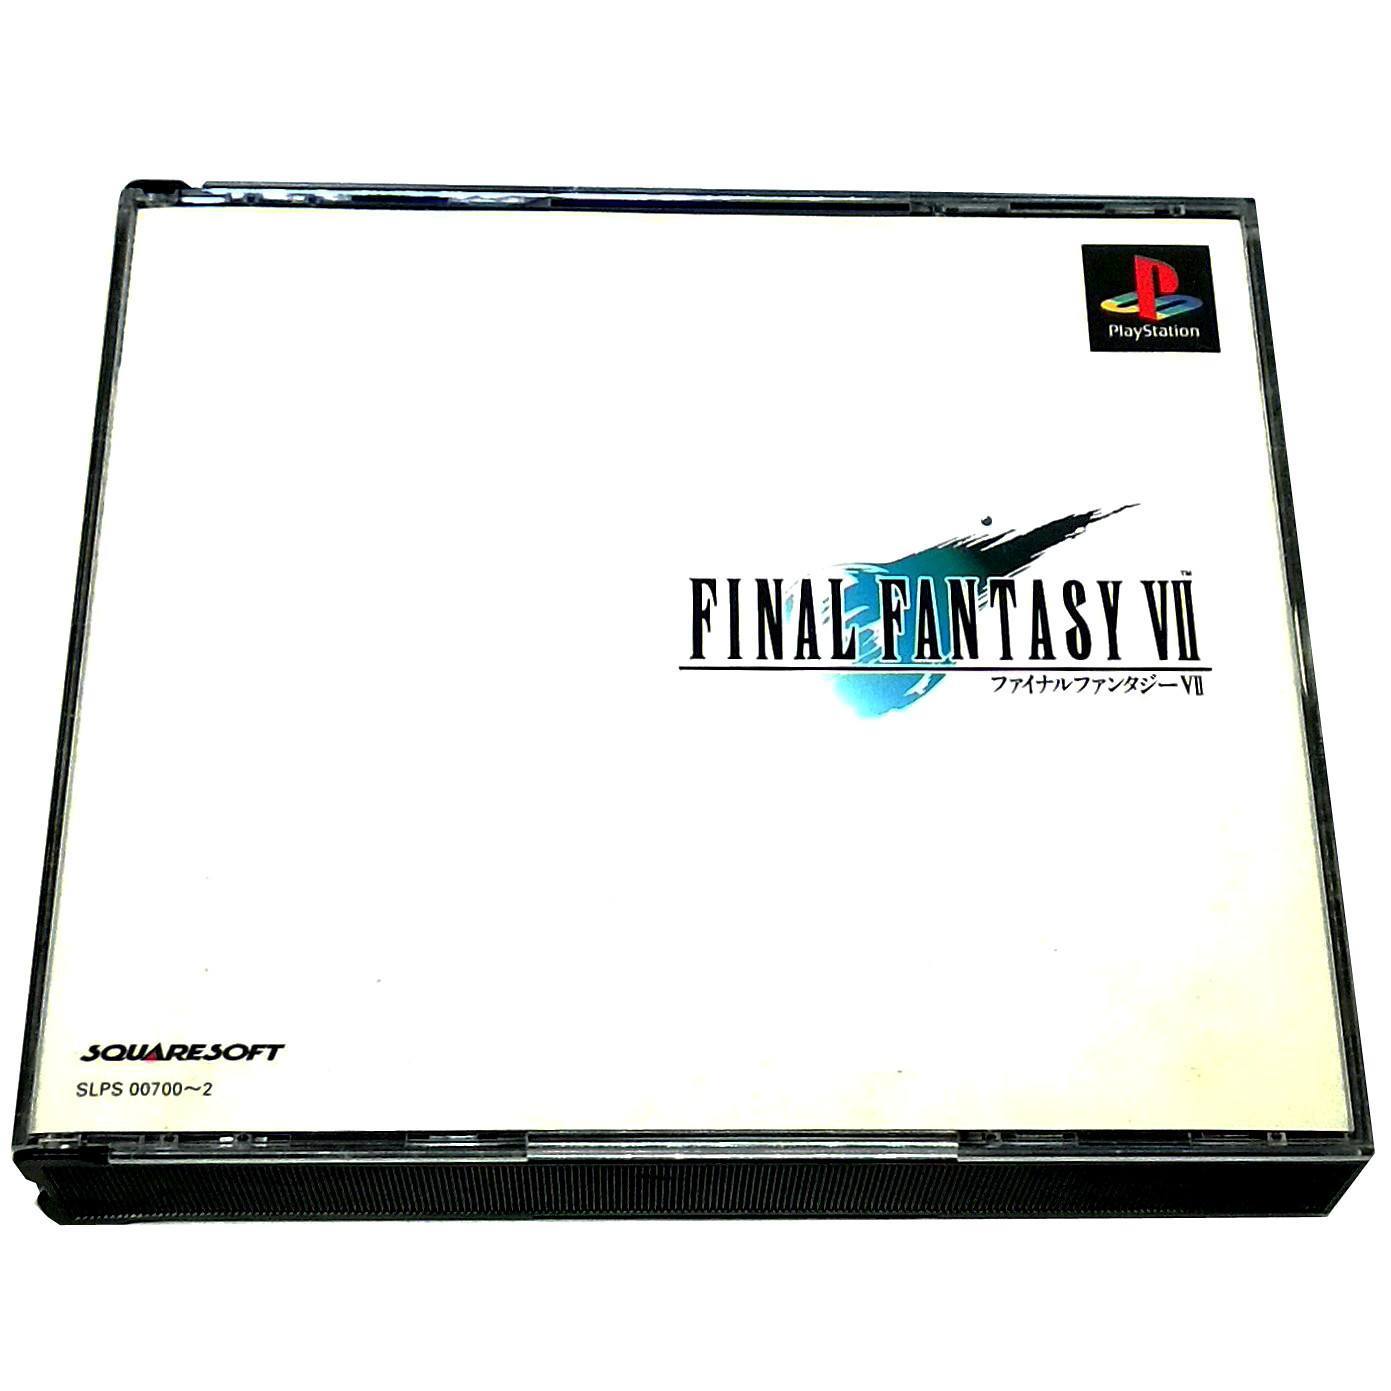 Final Fantasy VII for PlayStation (import) - Front of case